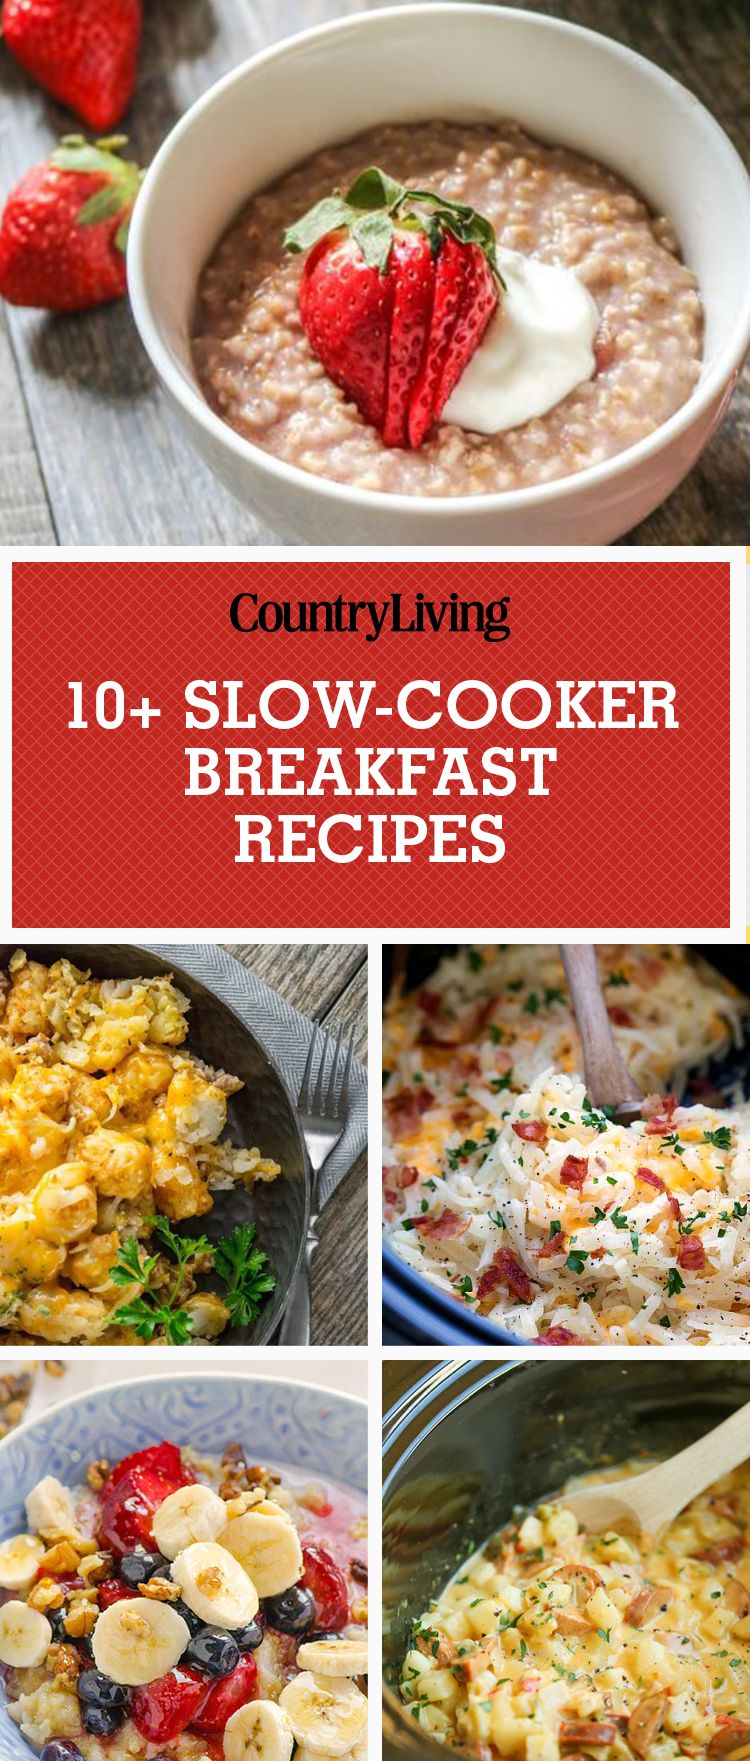 https://hips.hearstapps.com/countryliving/assets/17/20/1495129648-slow-cooker-breakfast-recipes.jpg